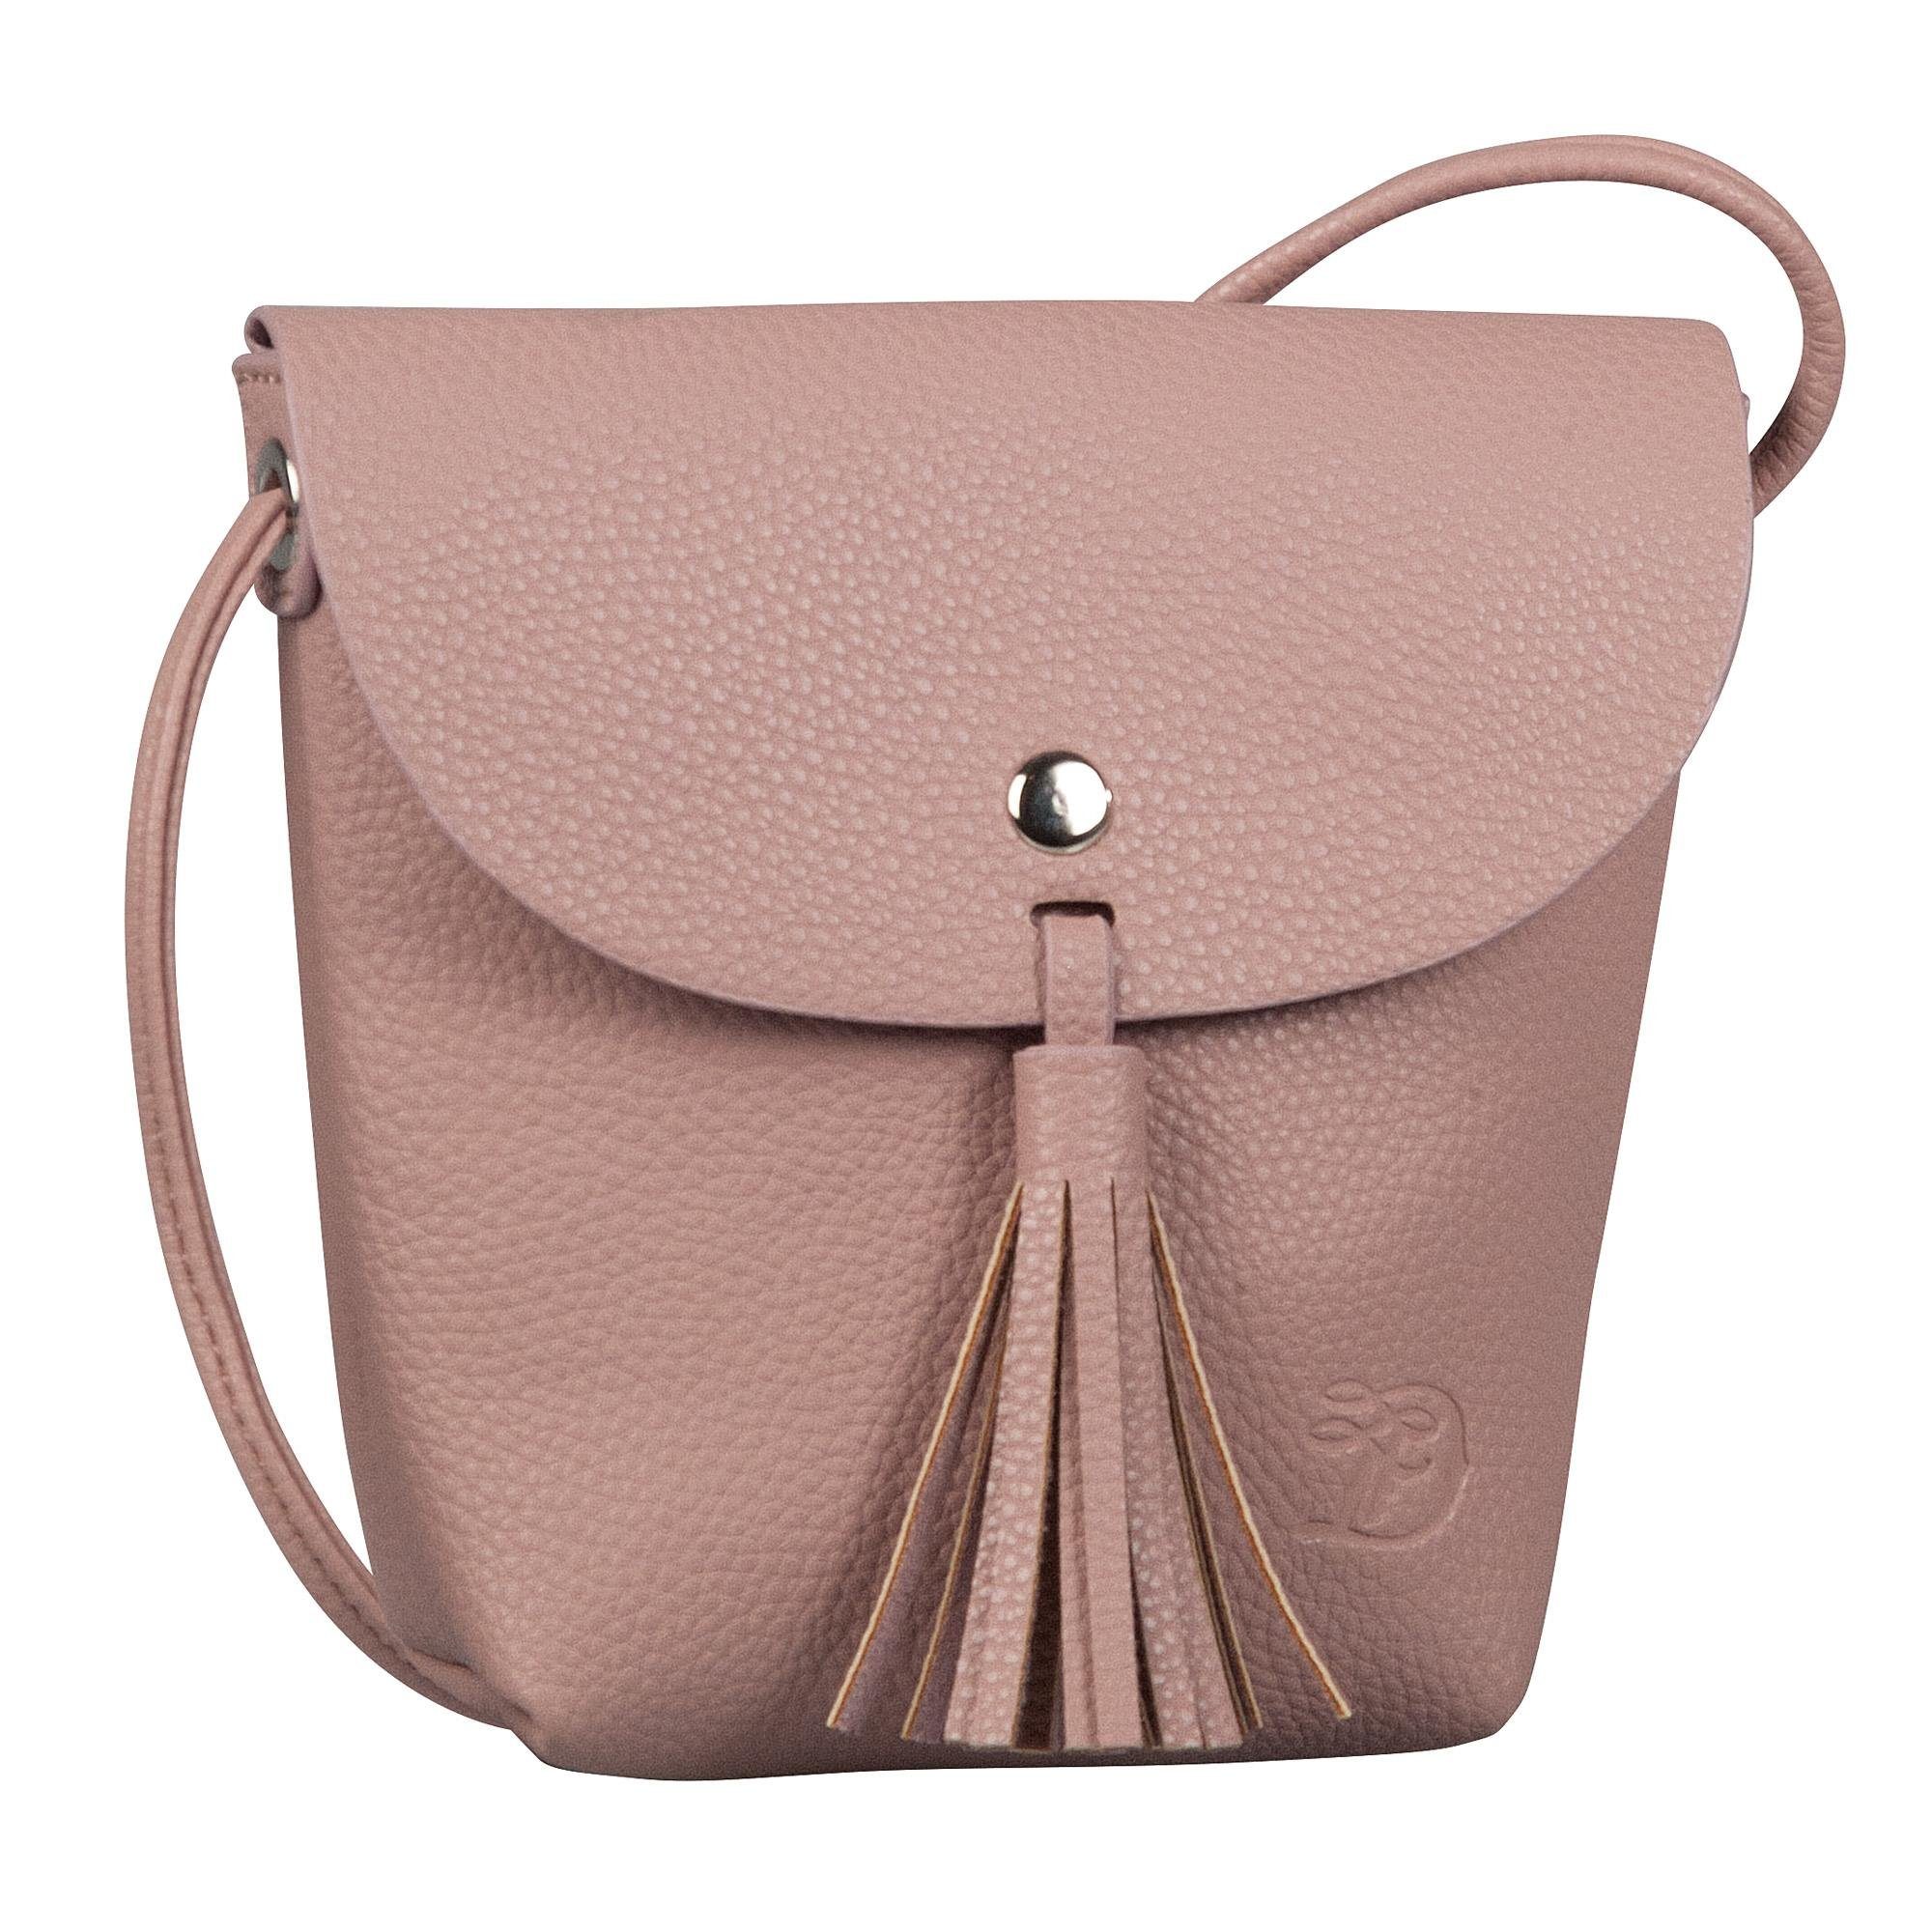 TOM TAILOR Denim Mini Bag »Ida«, mit Fransenapplikation online kaufen | OTTO